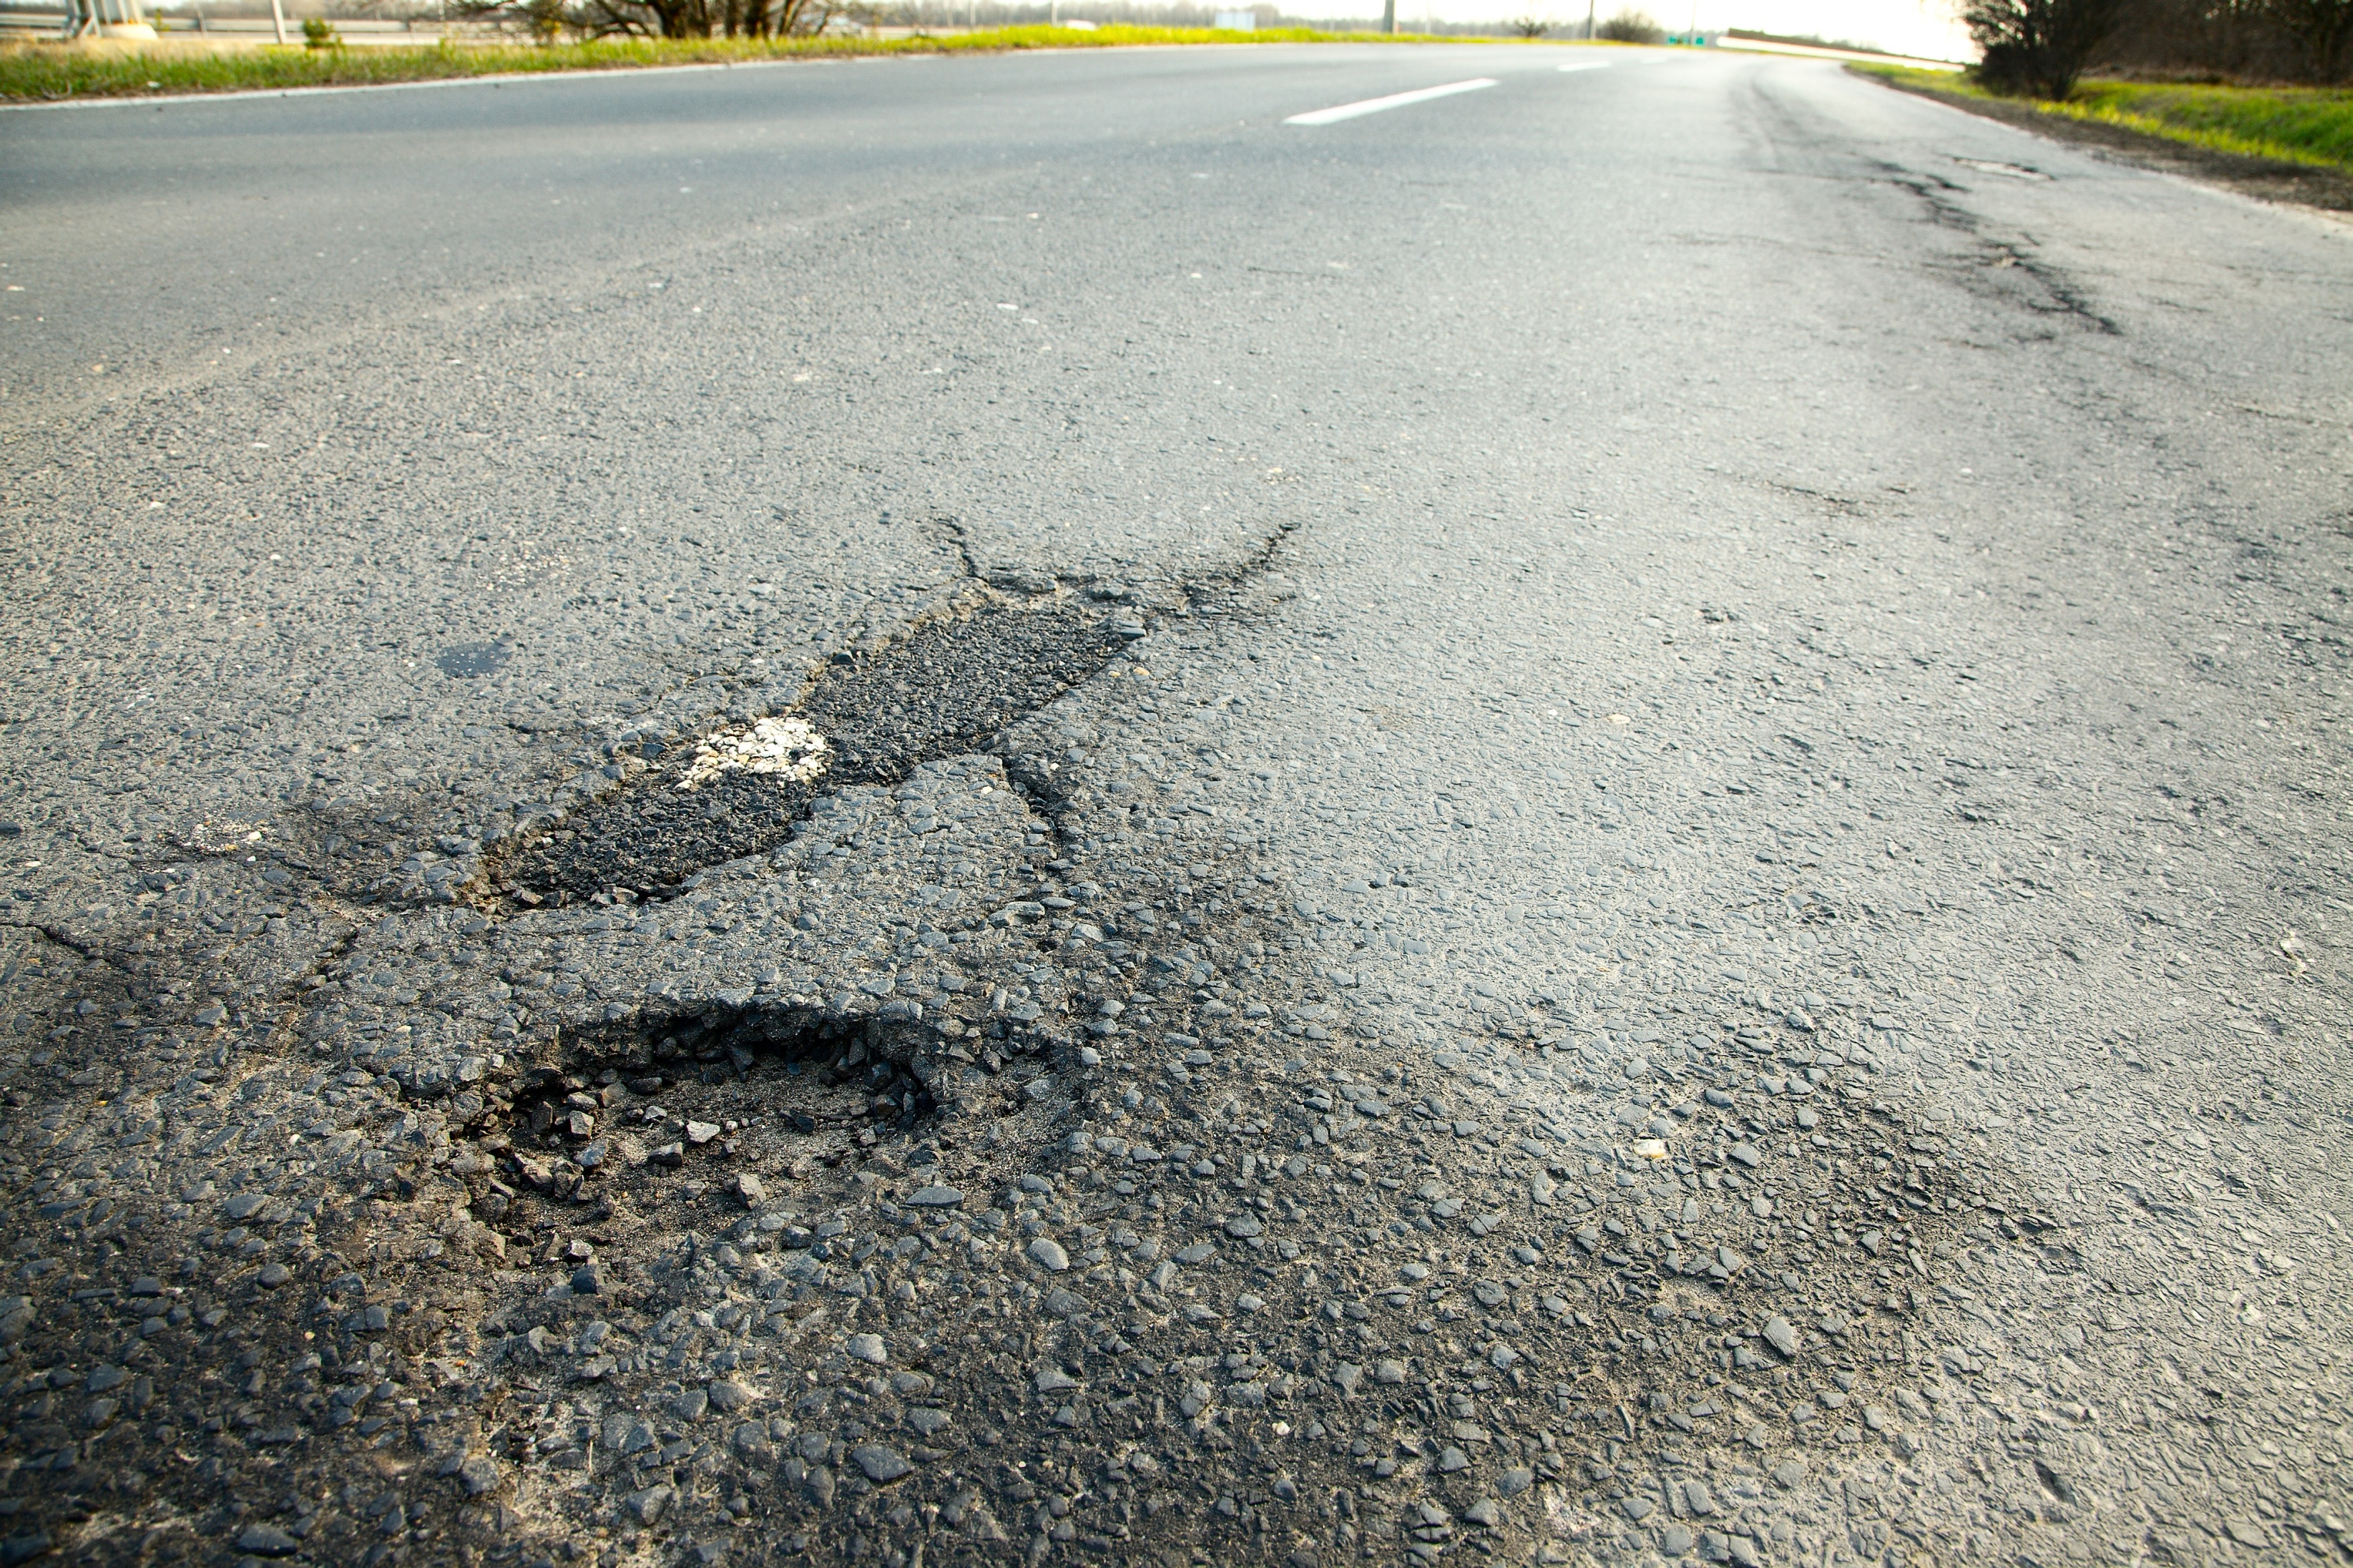 Pothole crack on the road surface